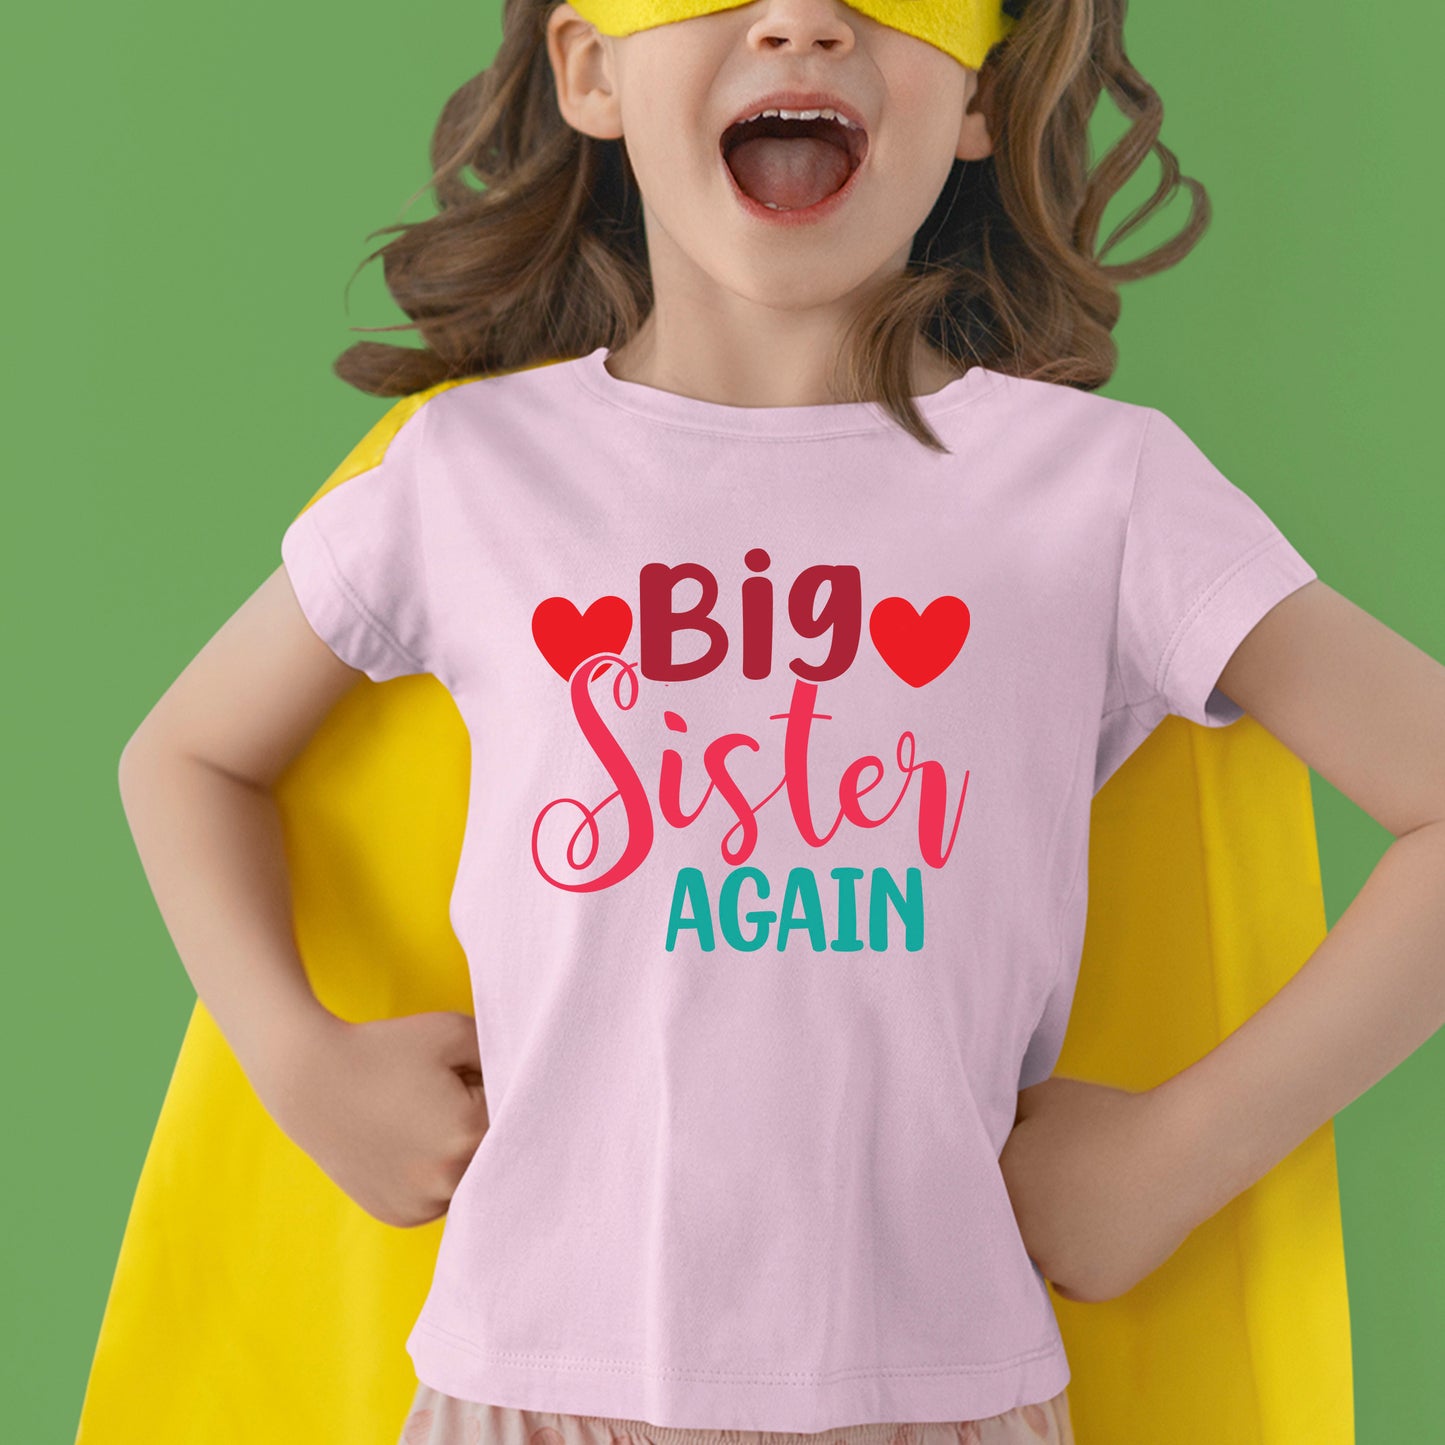 Big sister again Baby Announcement Toddler Shirt